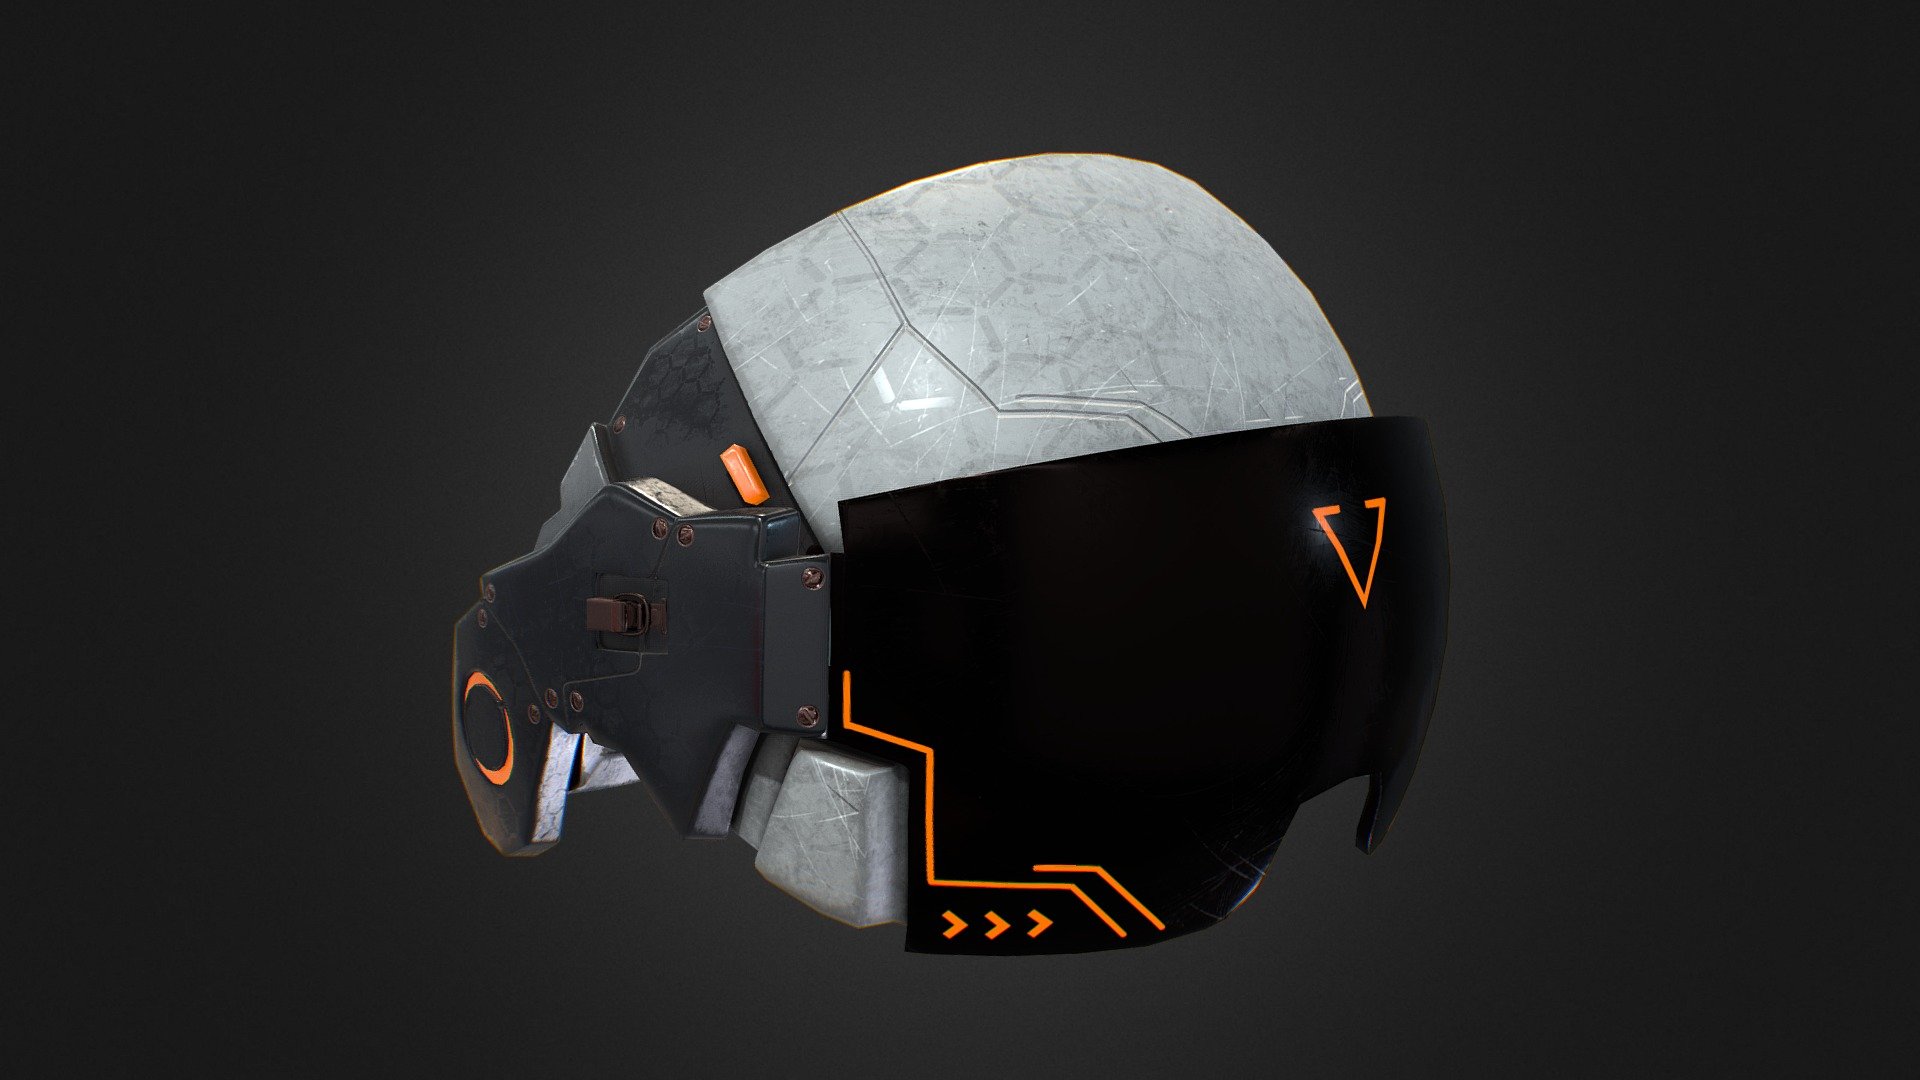 Sci-Fi Helmet - 3D model by roxana_moshashai [3c8705c] - Sketchfab